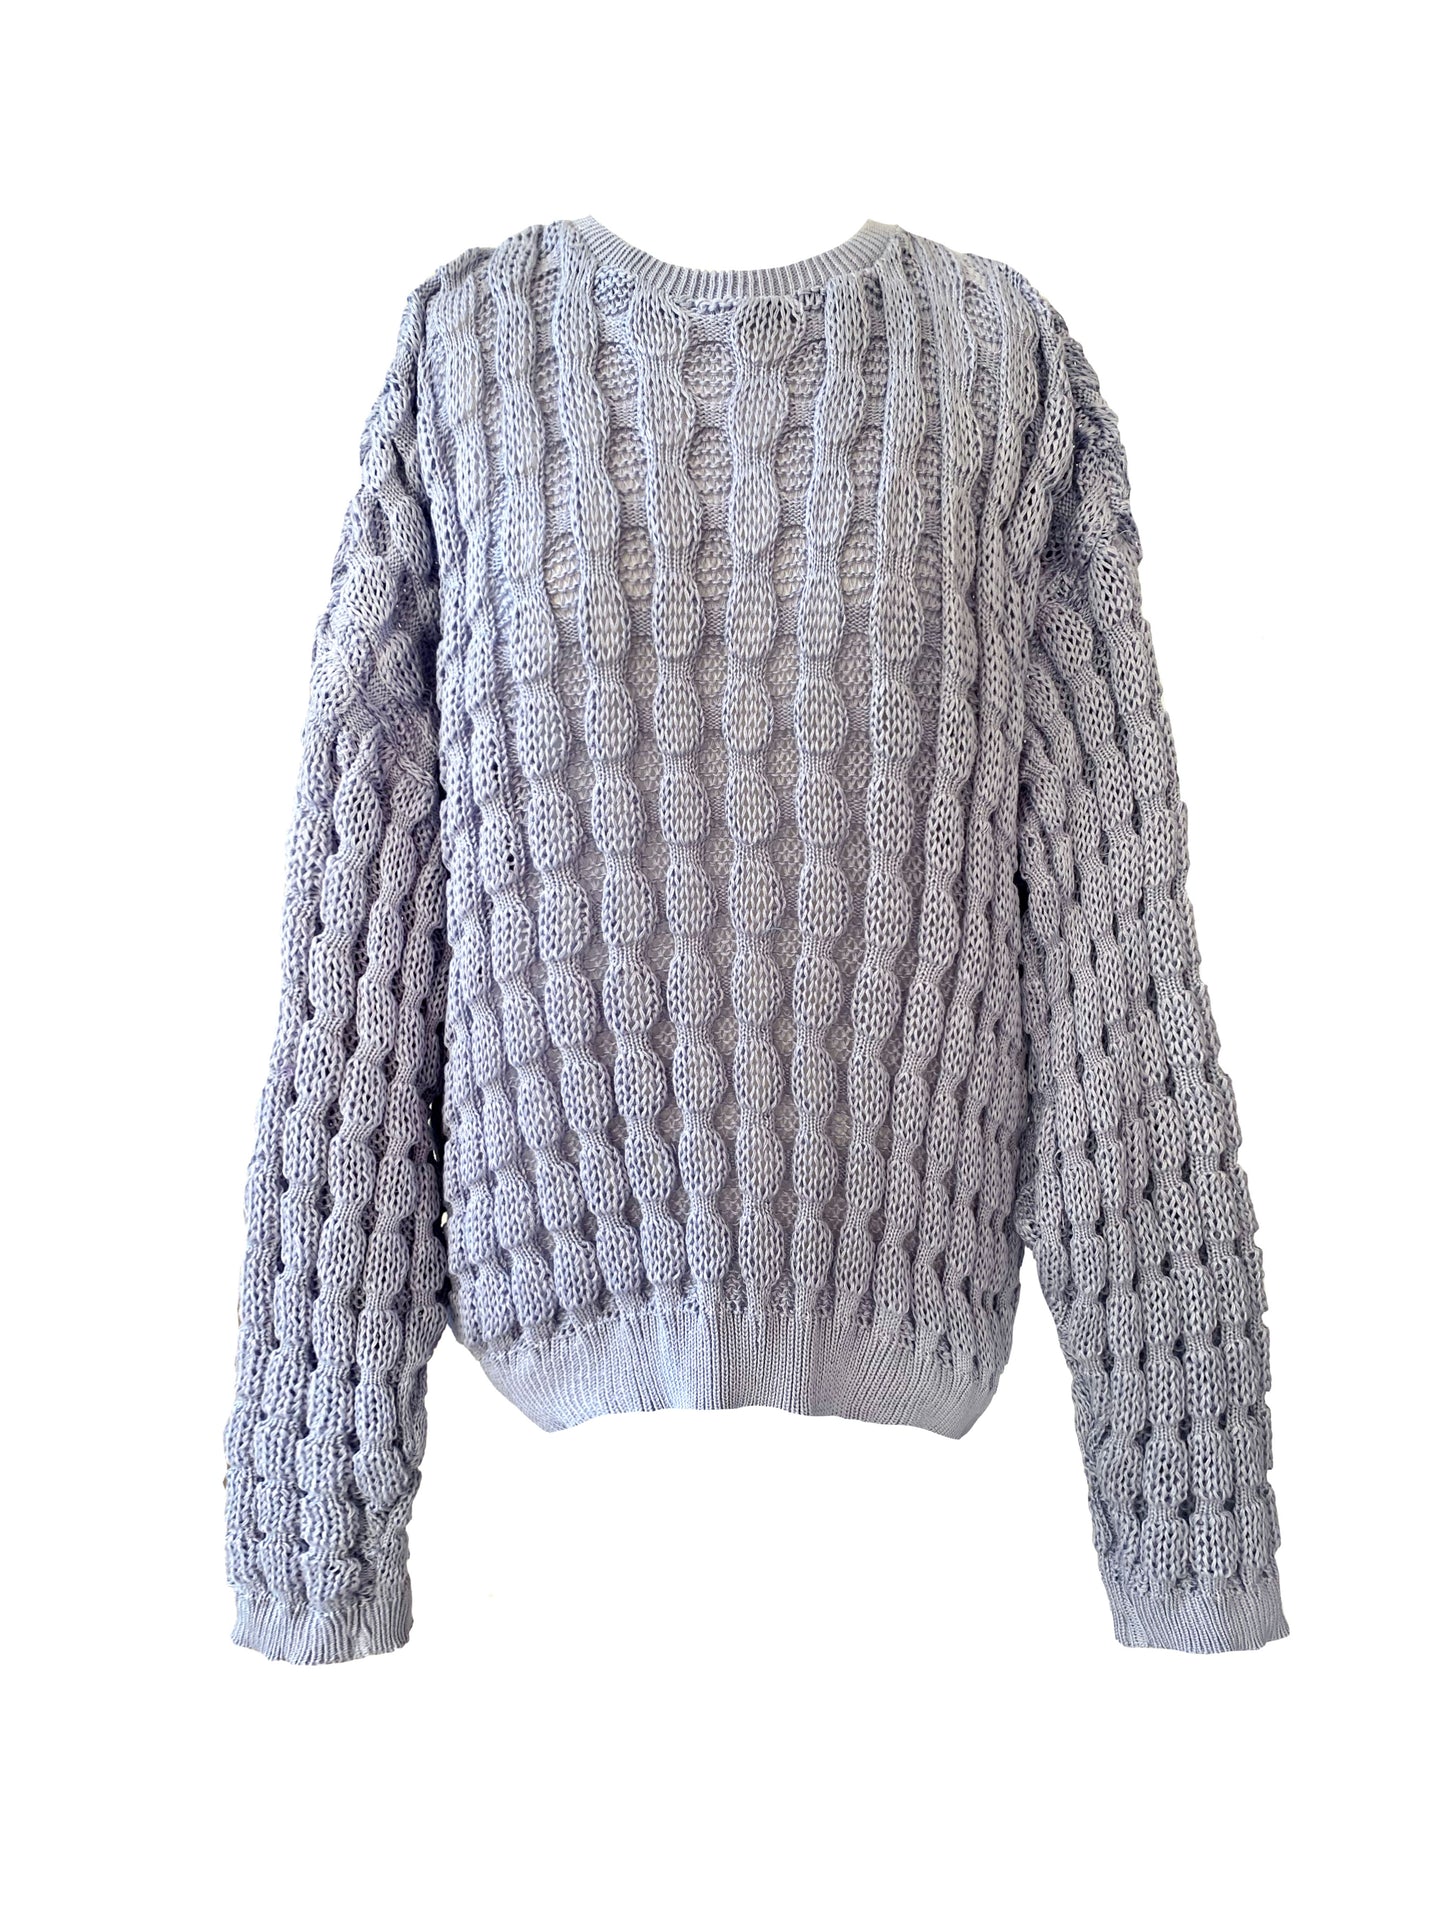 Bubble Knit Oversized Sweater CELESTIAL GRAY